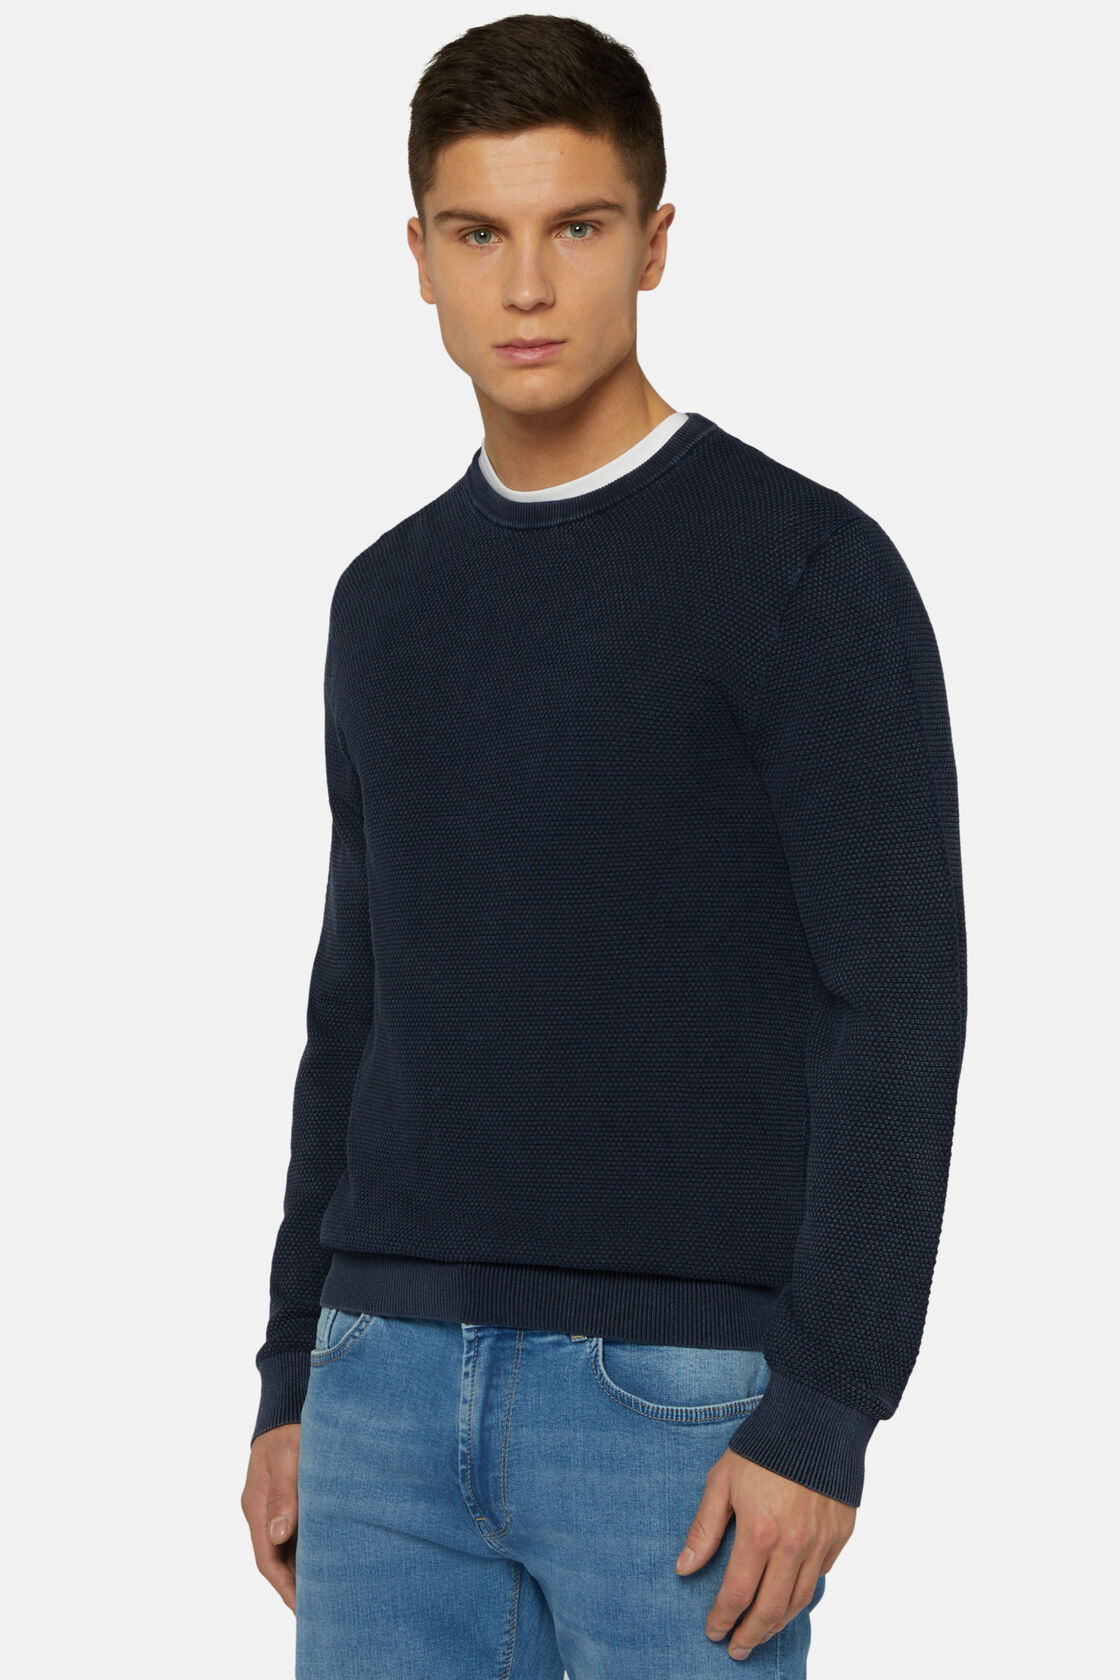 Cotton Stitching Crew Neck Sweater 12Gg